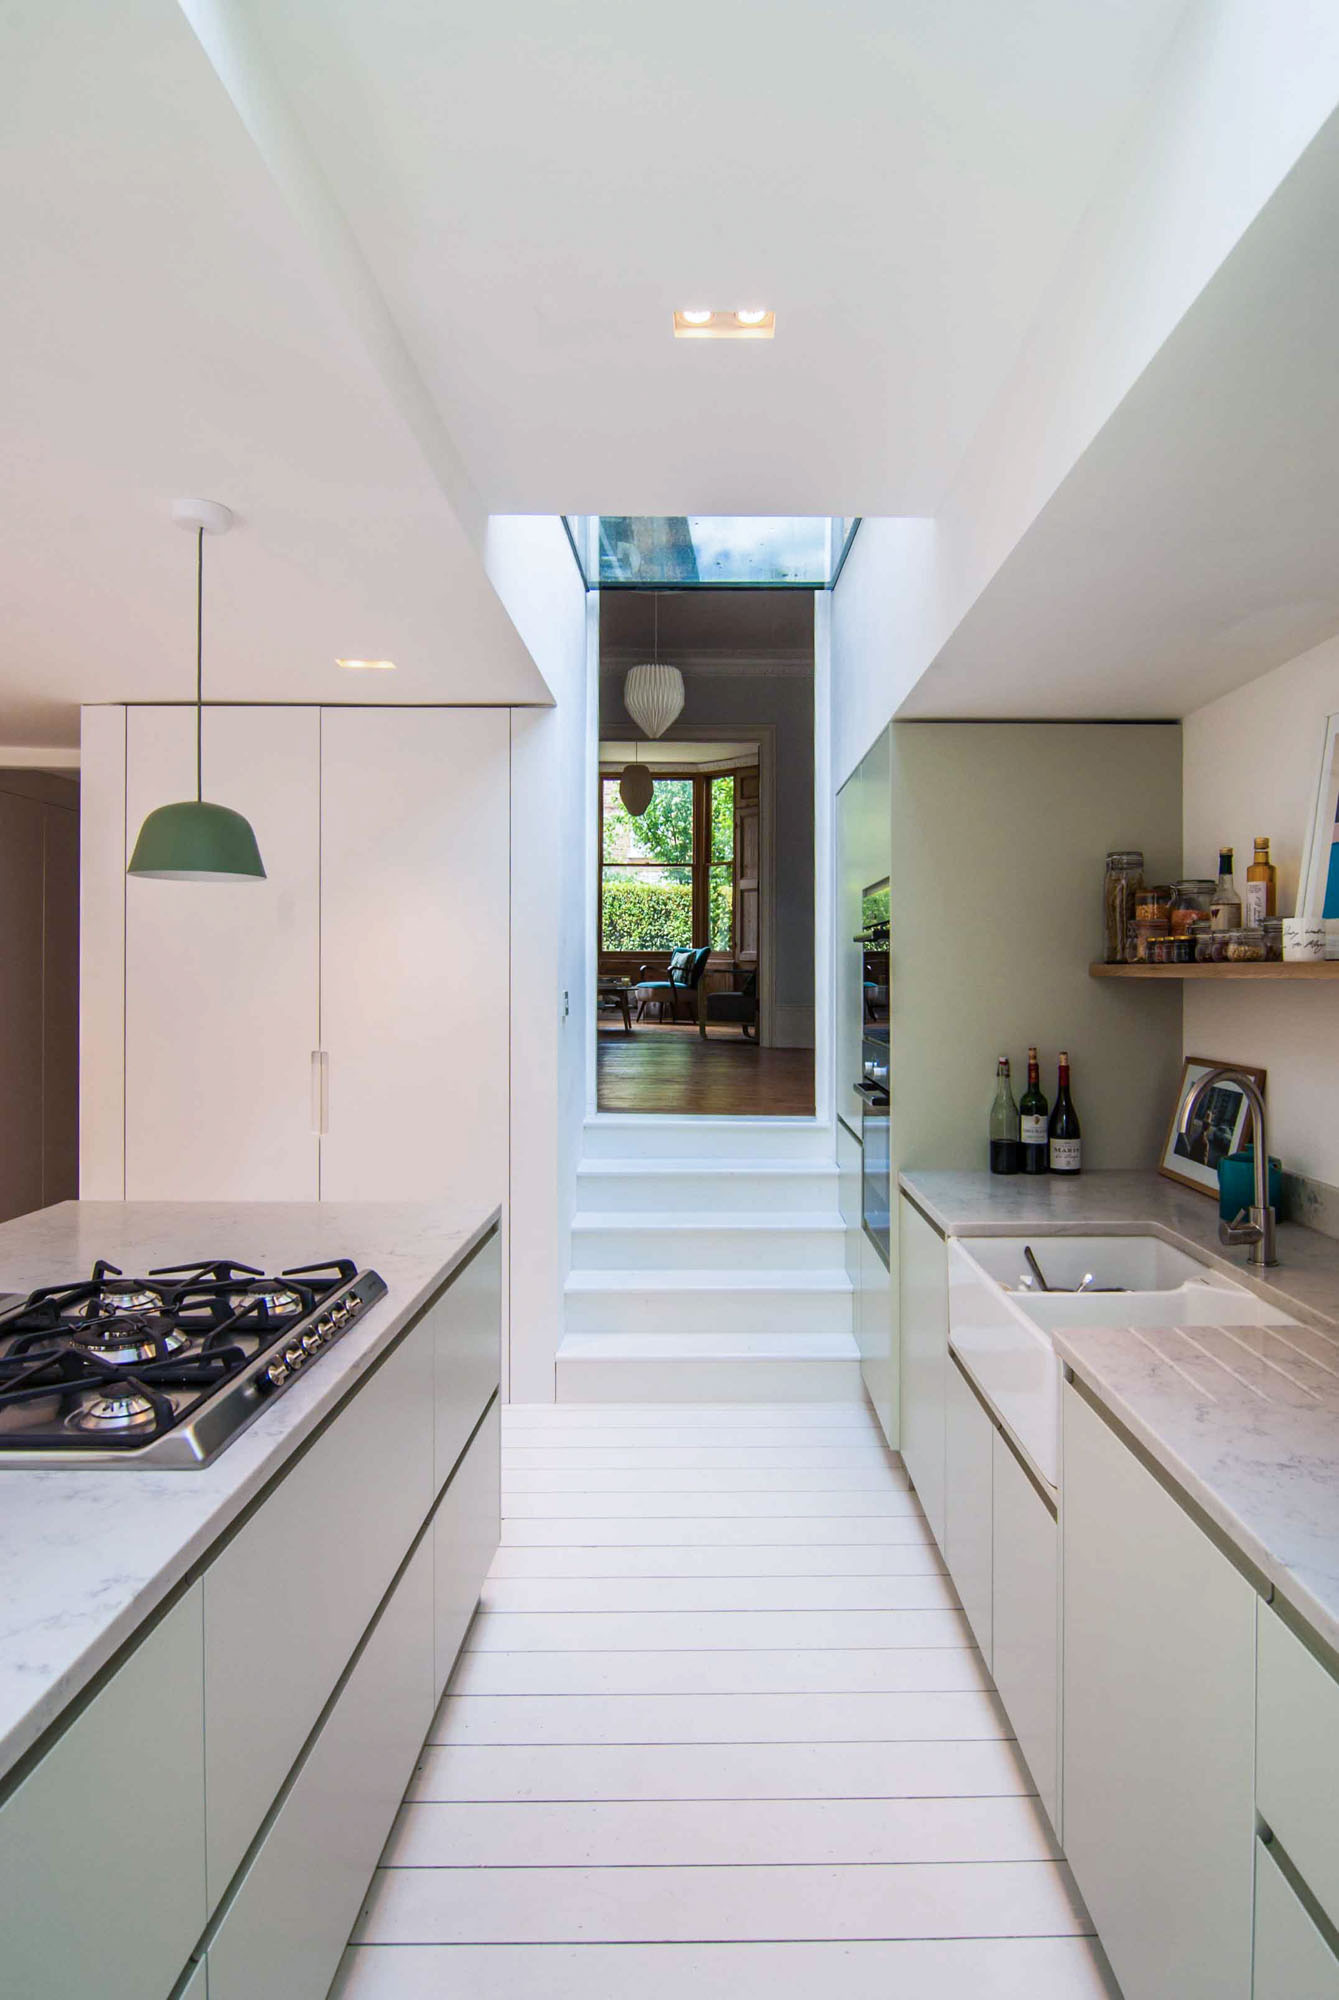 Photographer's House: Contemporary spacious kitchen with a minimalist colour palette.